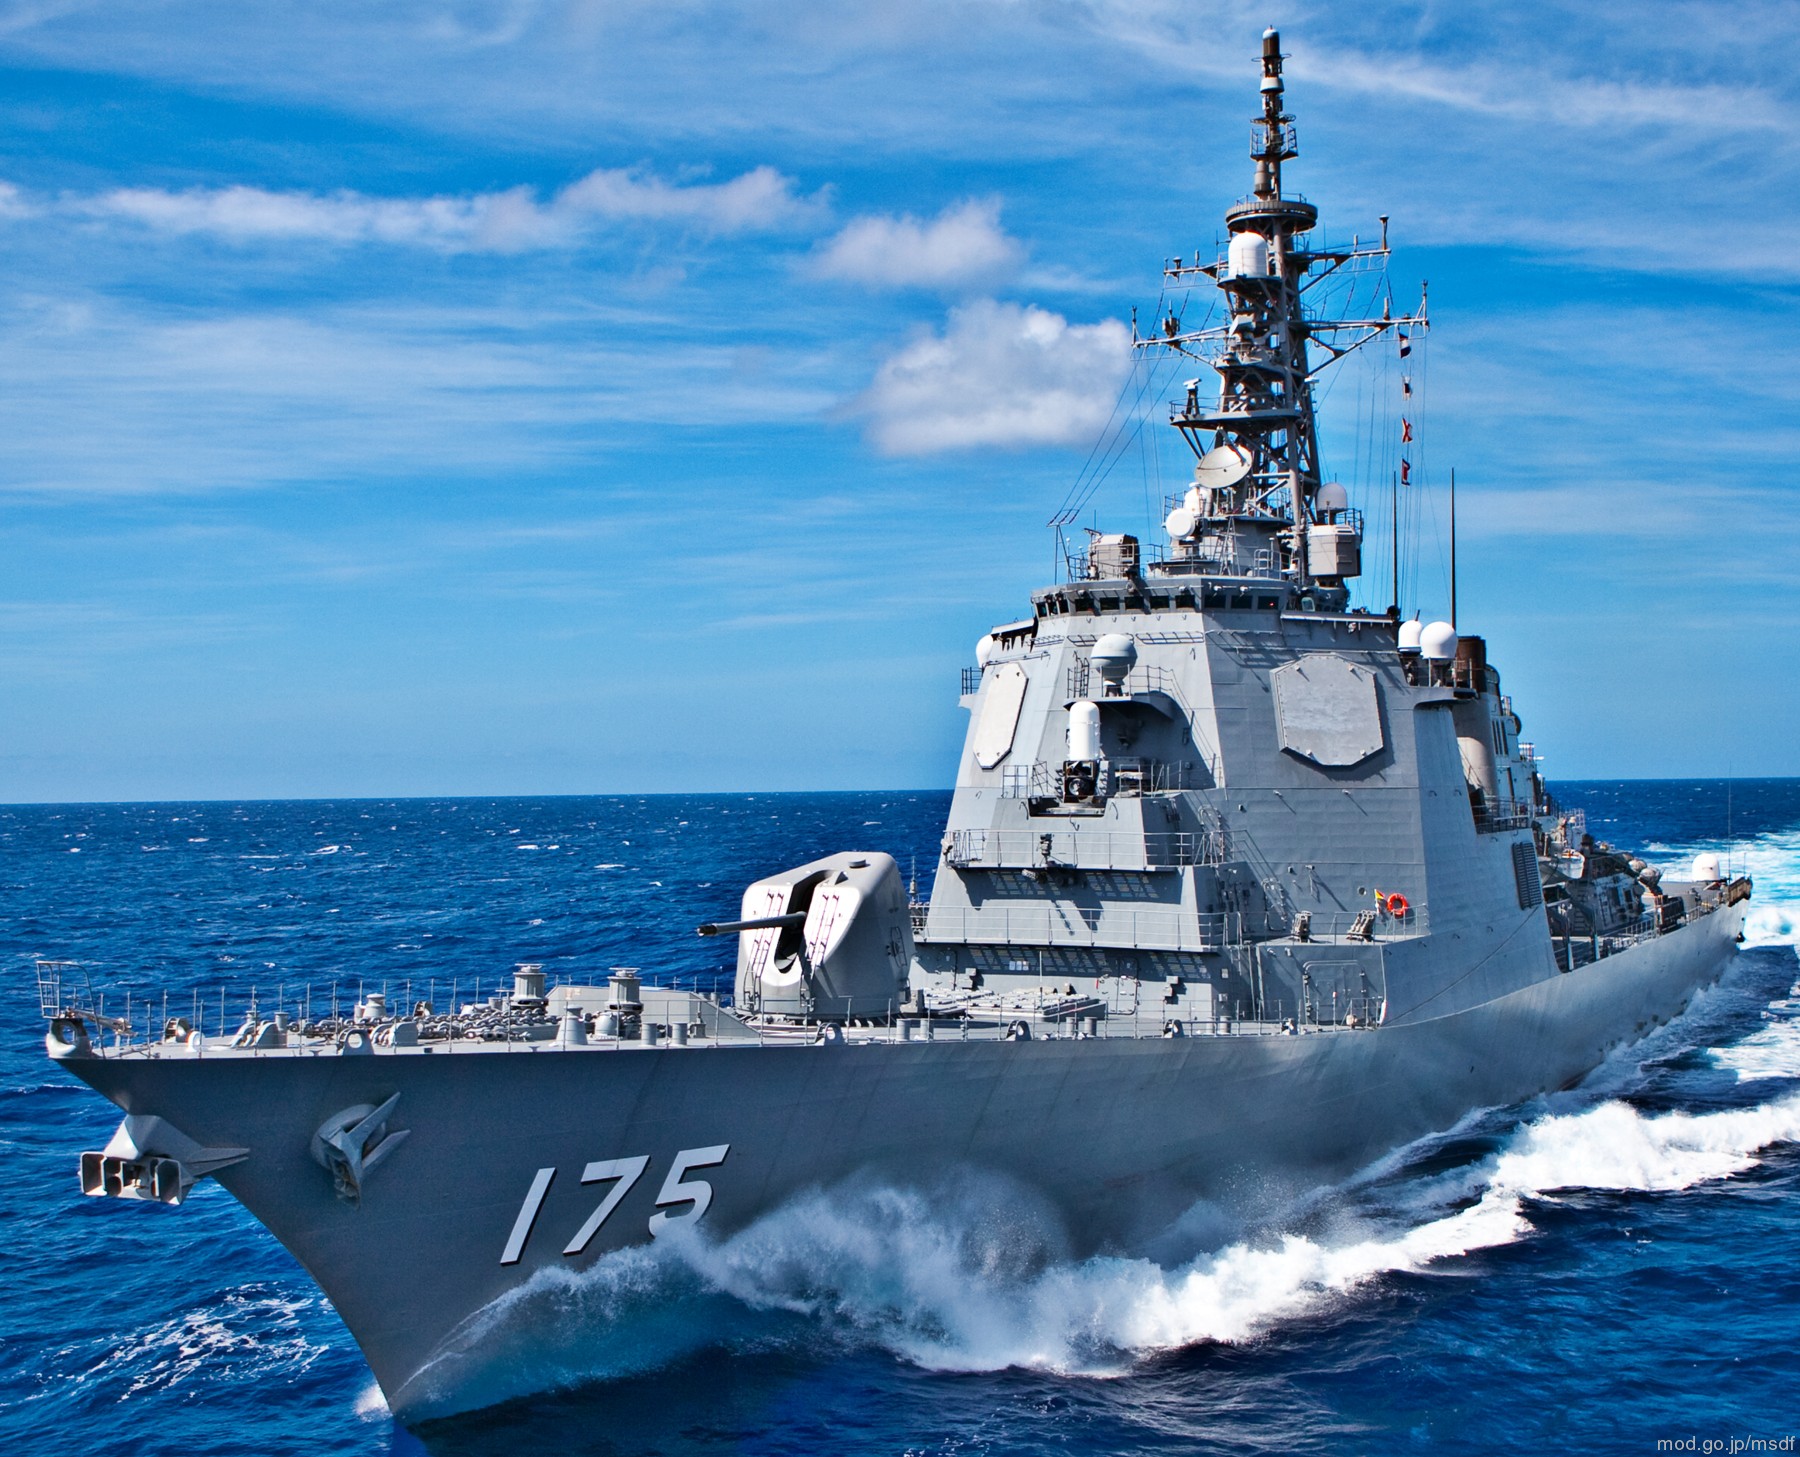 ddg-175 jds myoko kongou class destroyer japan maritime self defense force jmsdf 06